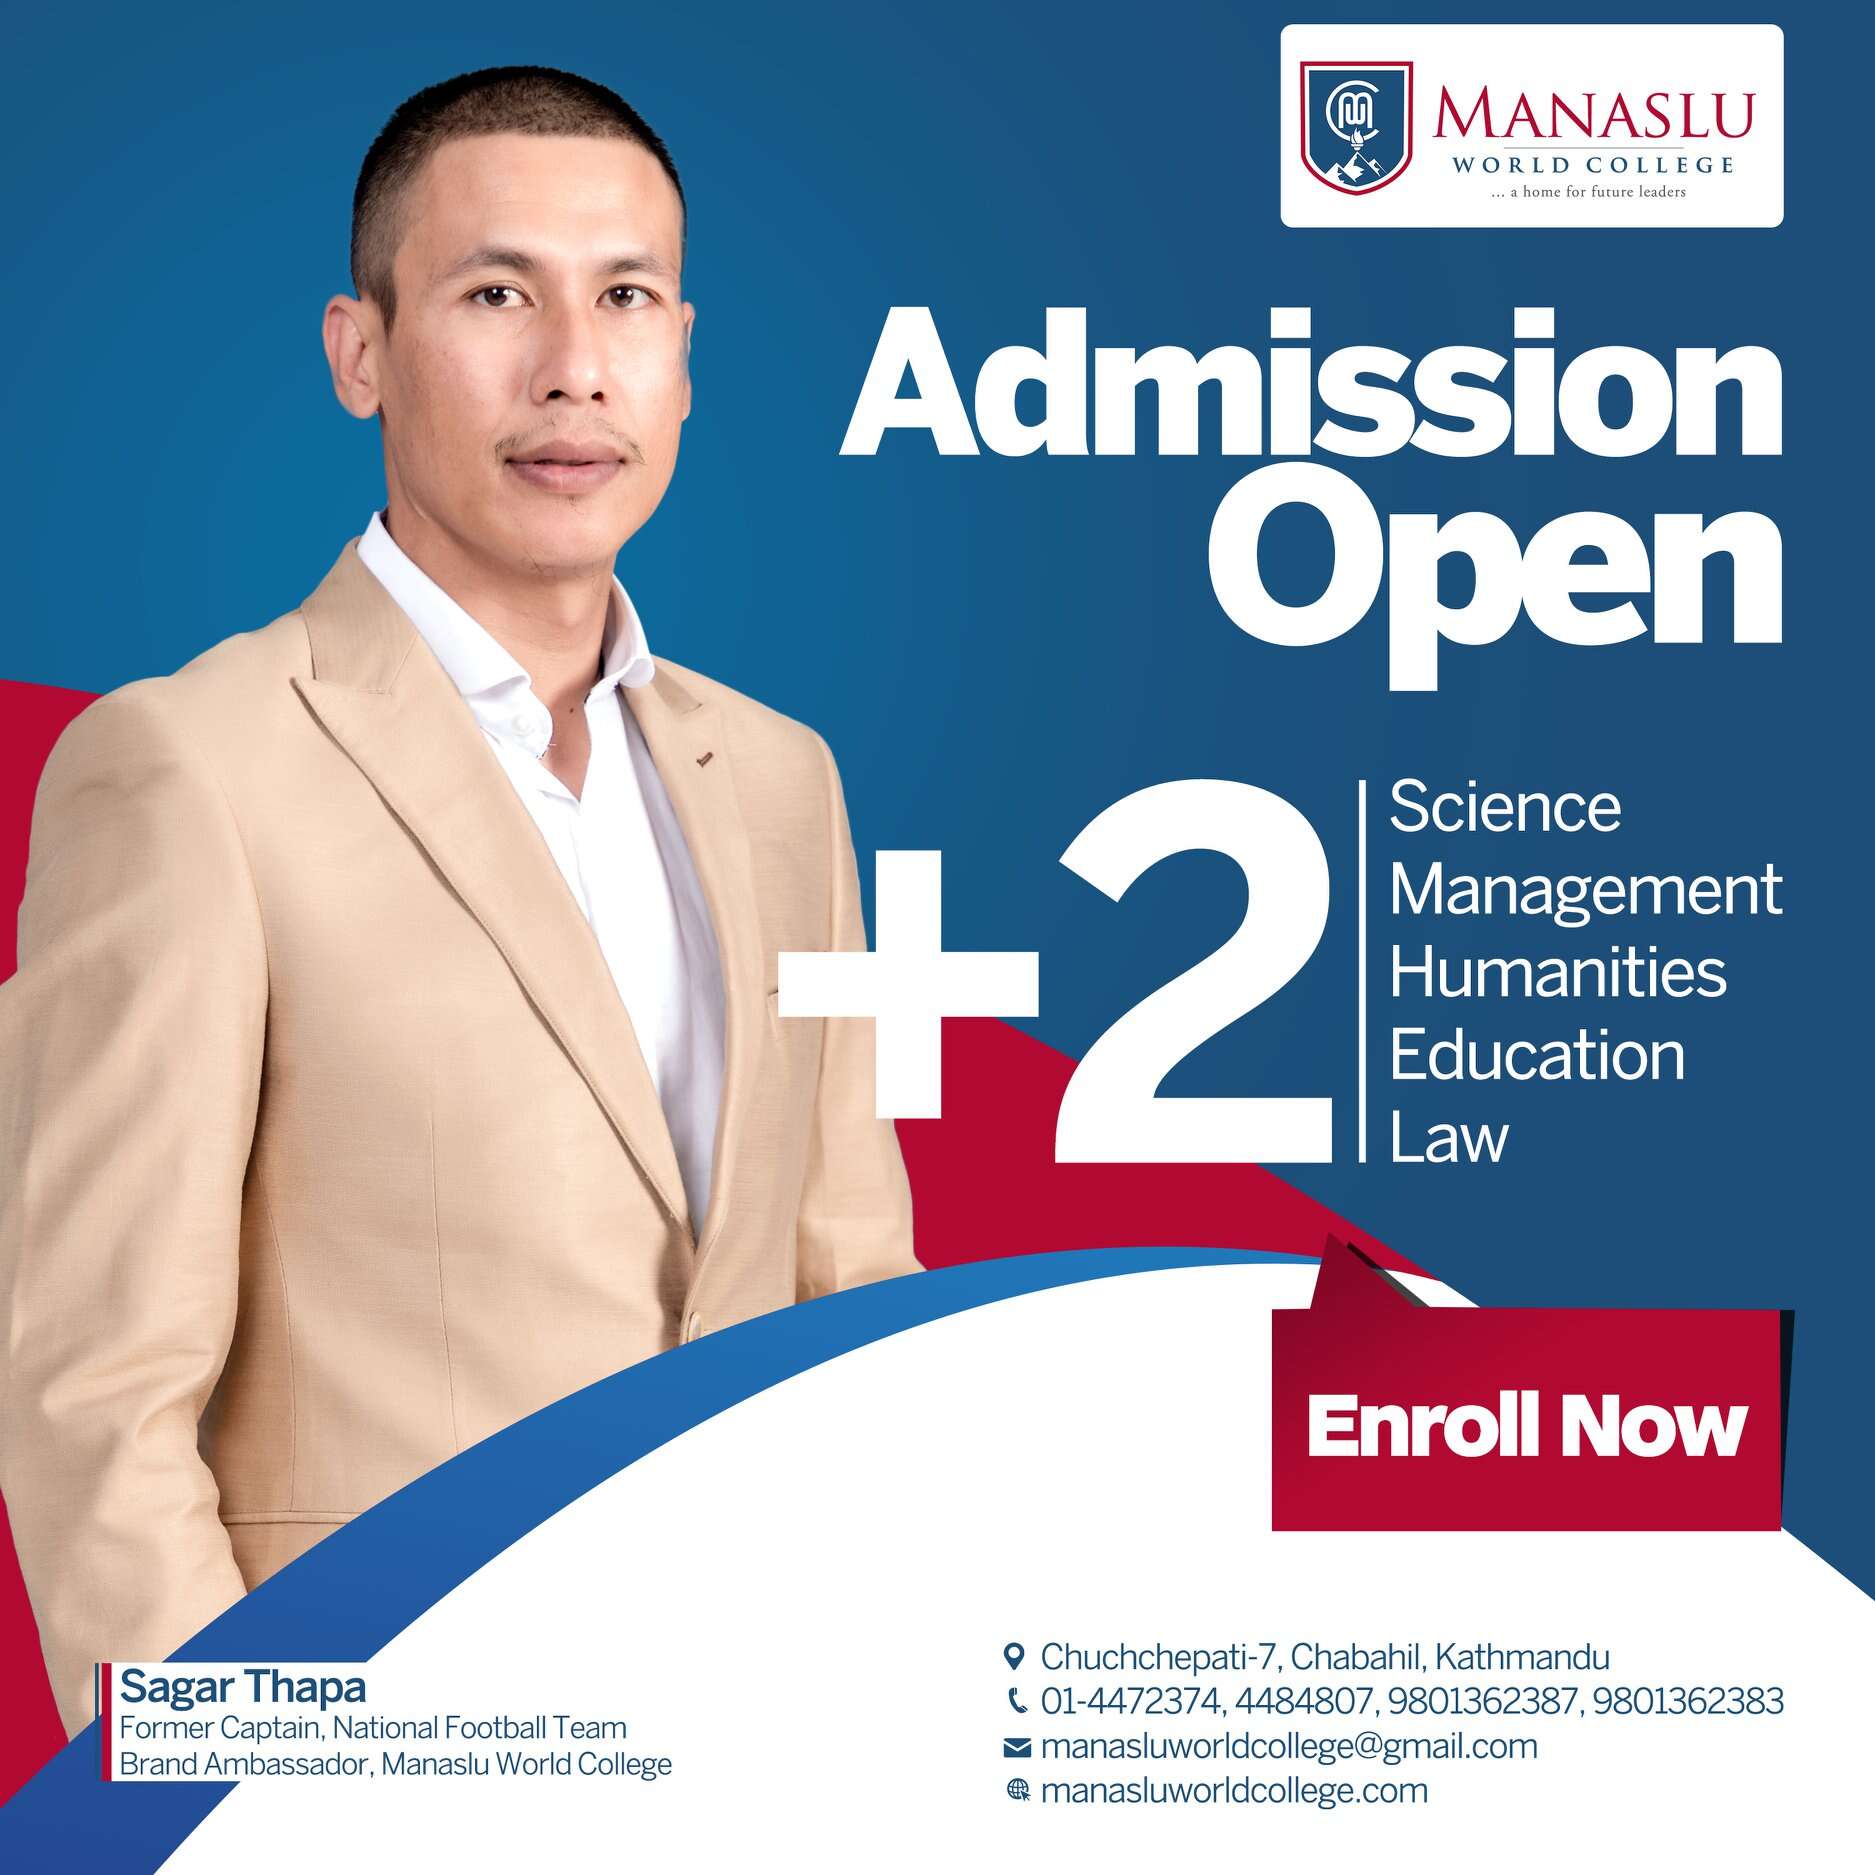 Manaslu World College